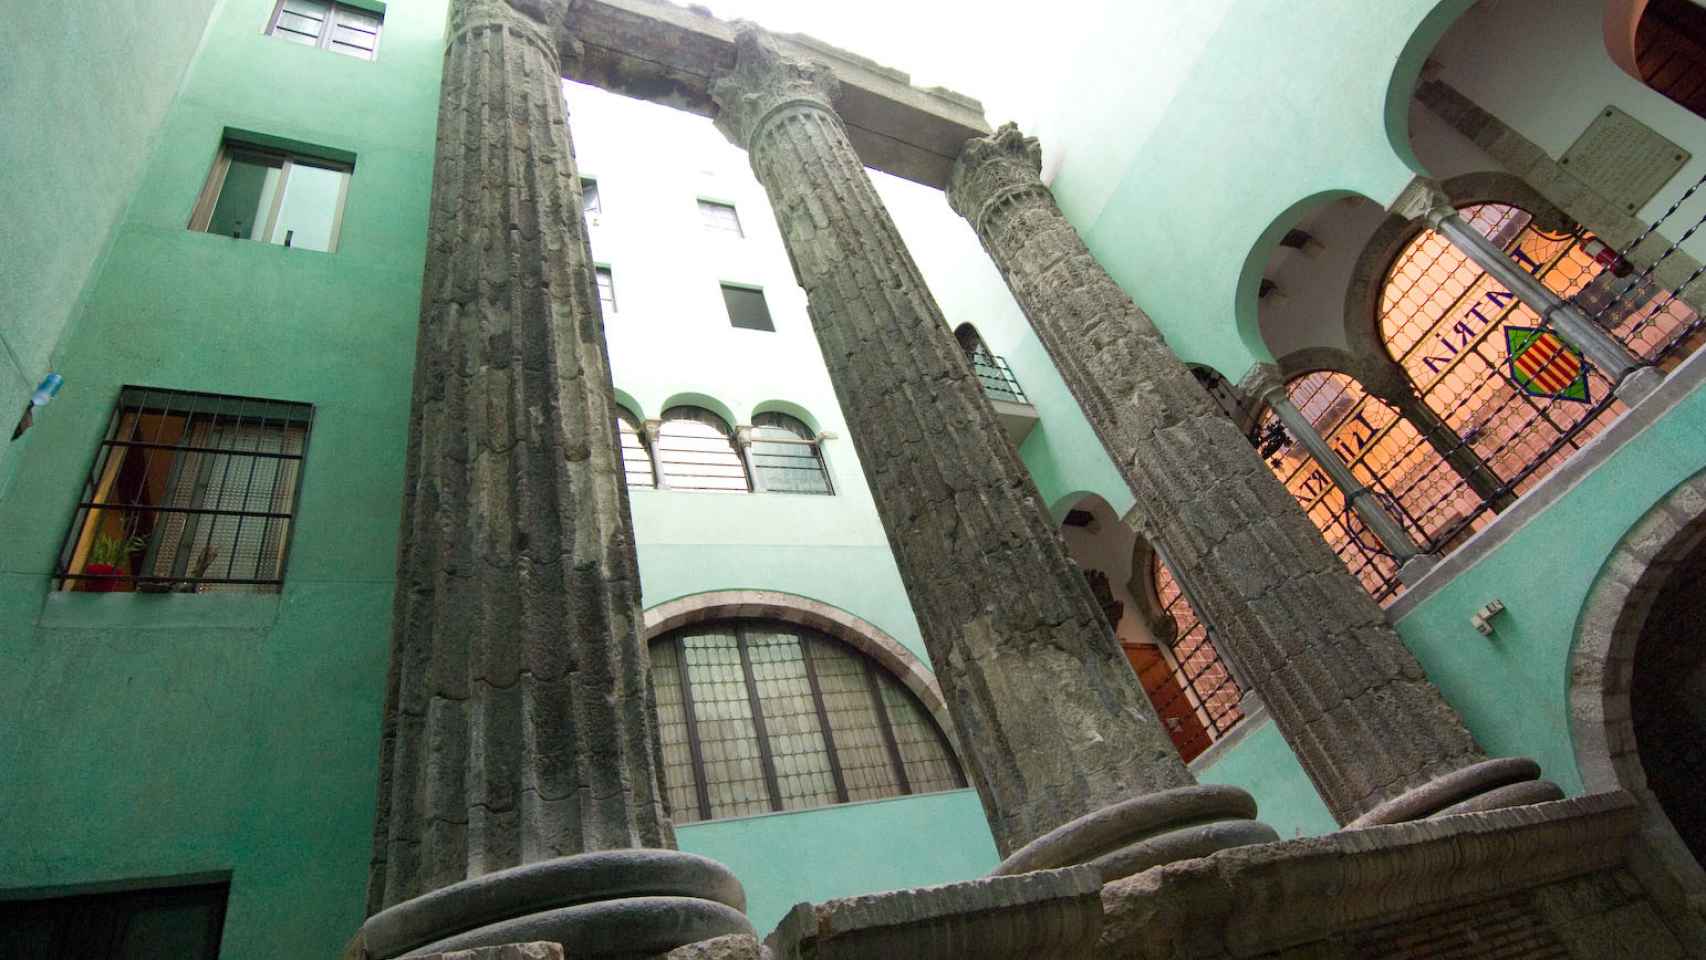 Columnas del templo romano de Barcelona